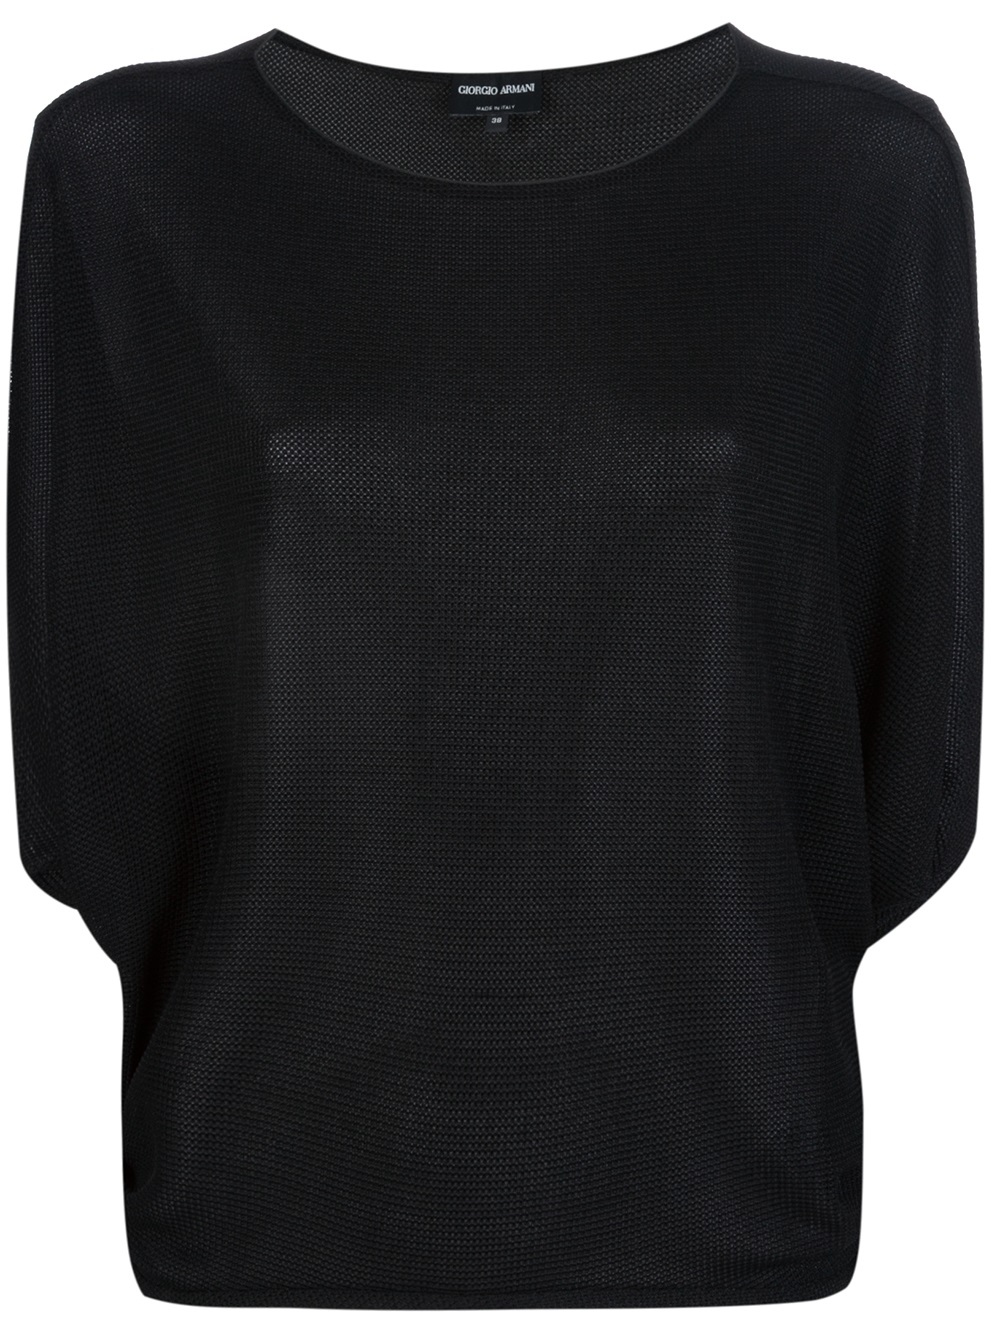 Lyst - Giorgio Armani Draped Sleeve Tshirt in Black